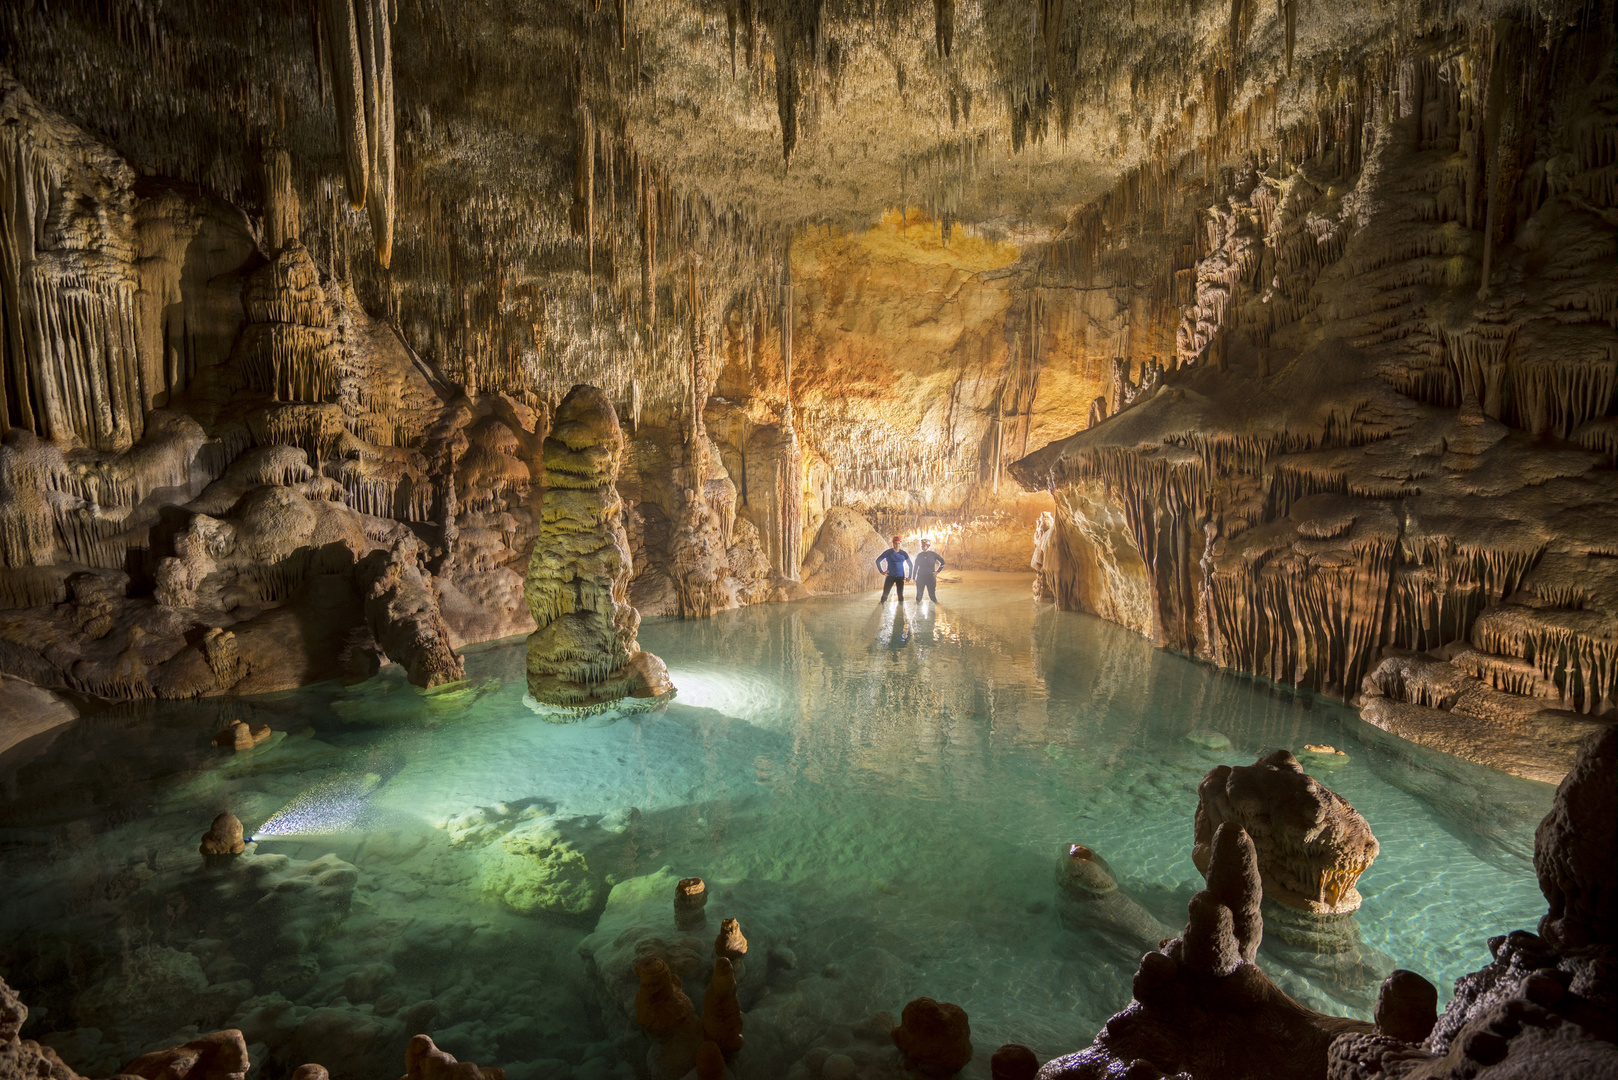 Höhle Mallorca Cova des Coloms de Cala Falca